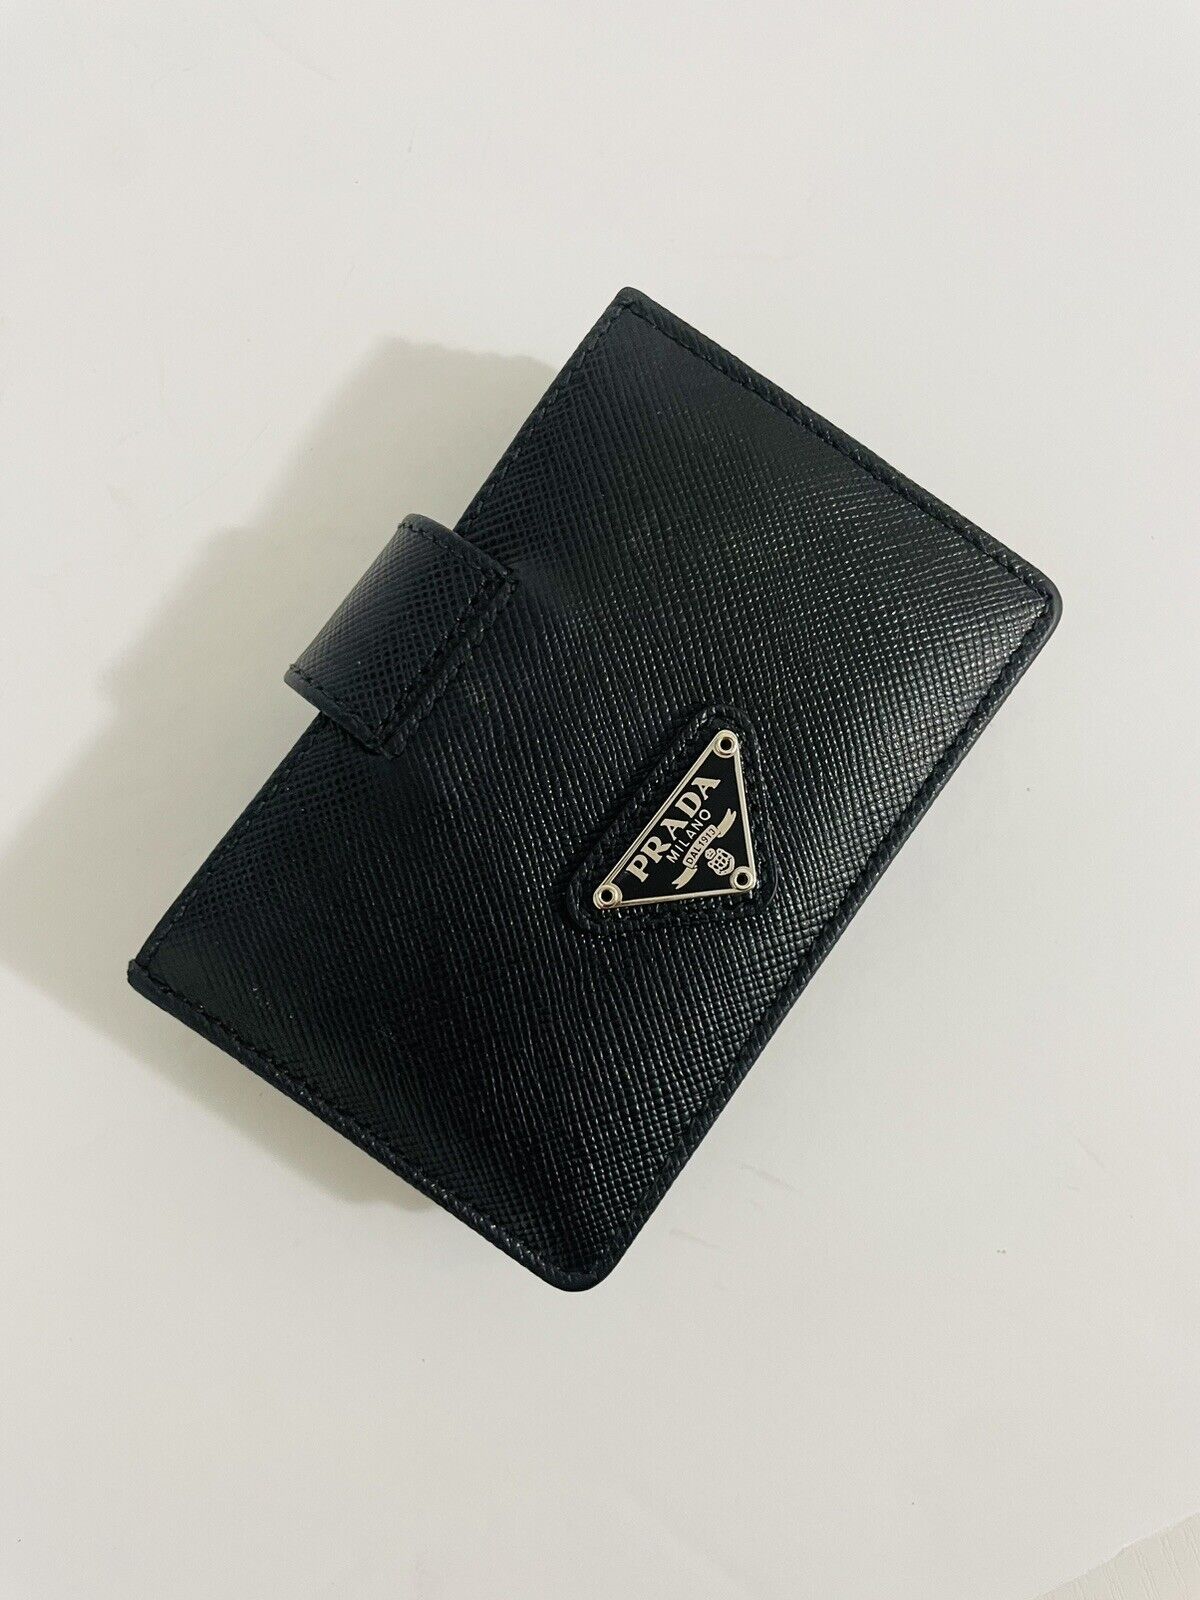 Prada Saffiano Leather Accordion Card Case Black - image 2